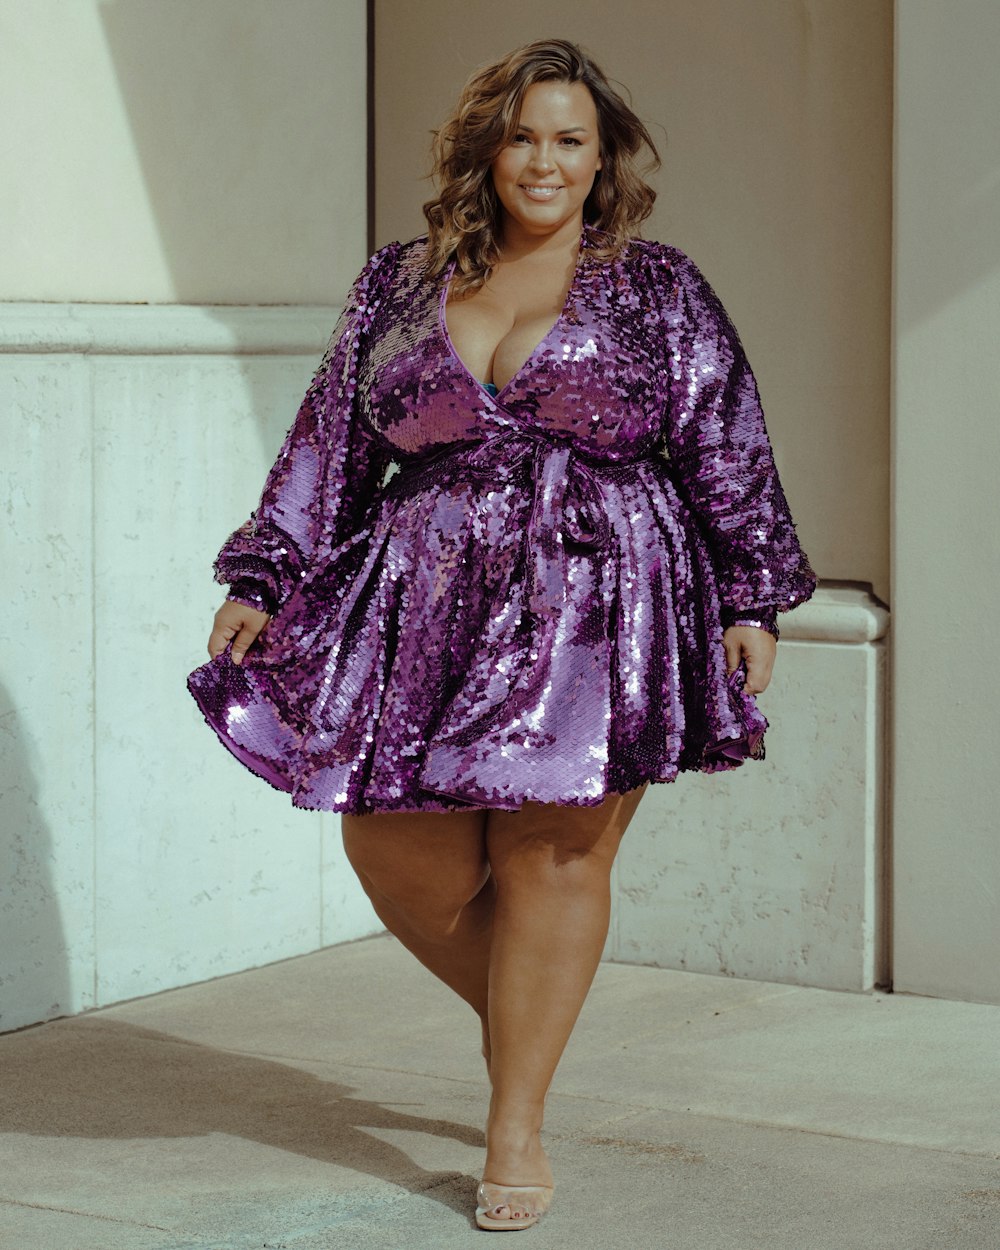 a woman wearing a purple dress